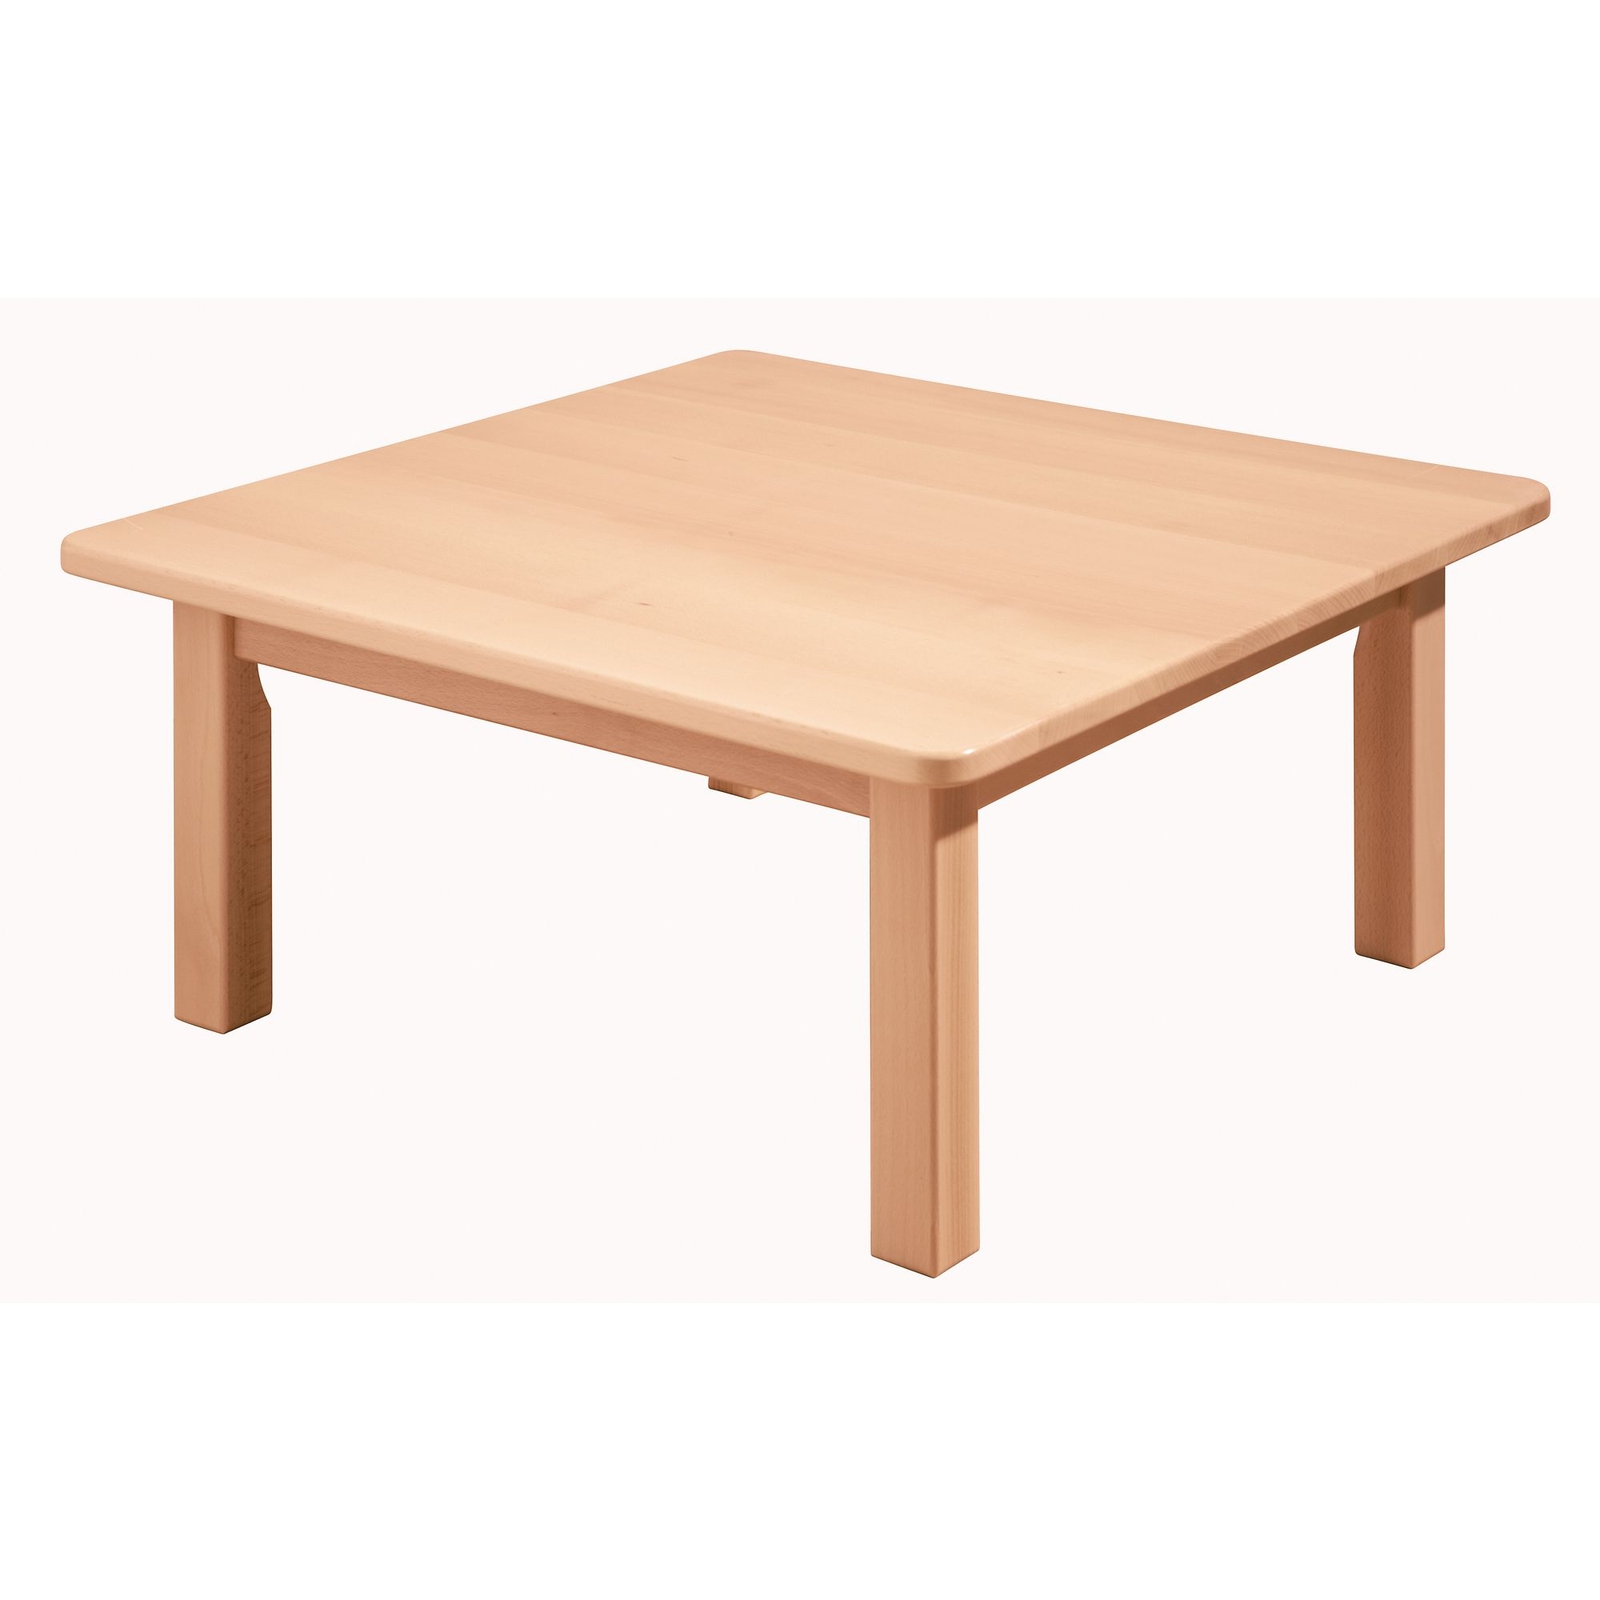 GALT Square Solid Beech Classroom Table - 690 x 690 x 300mm - Beech